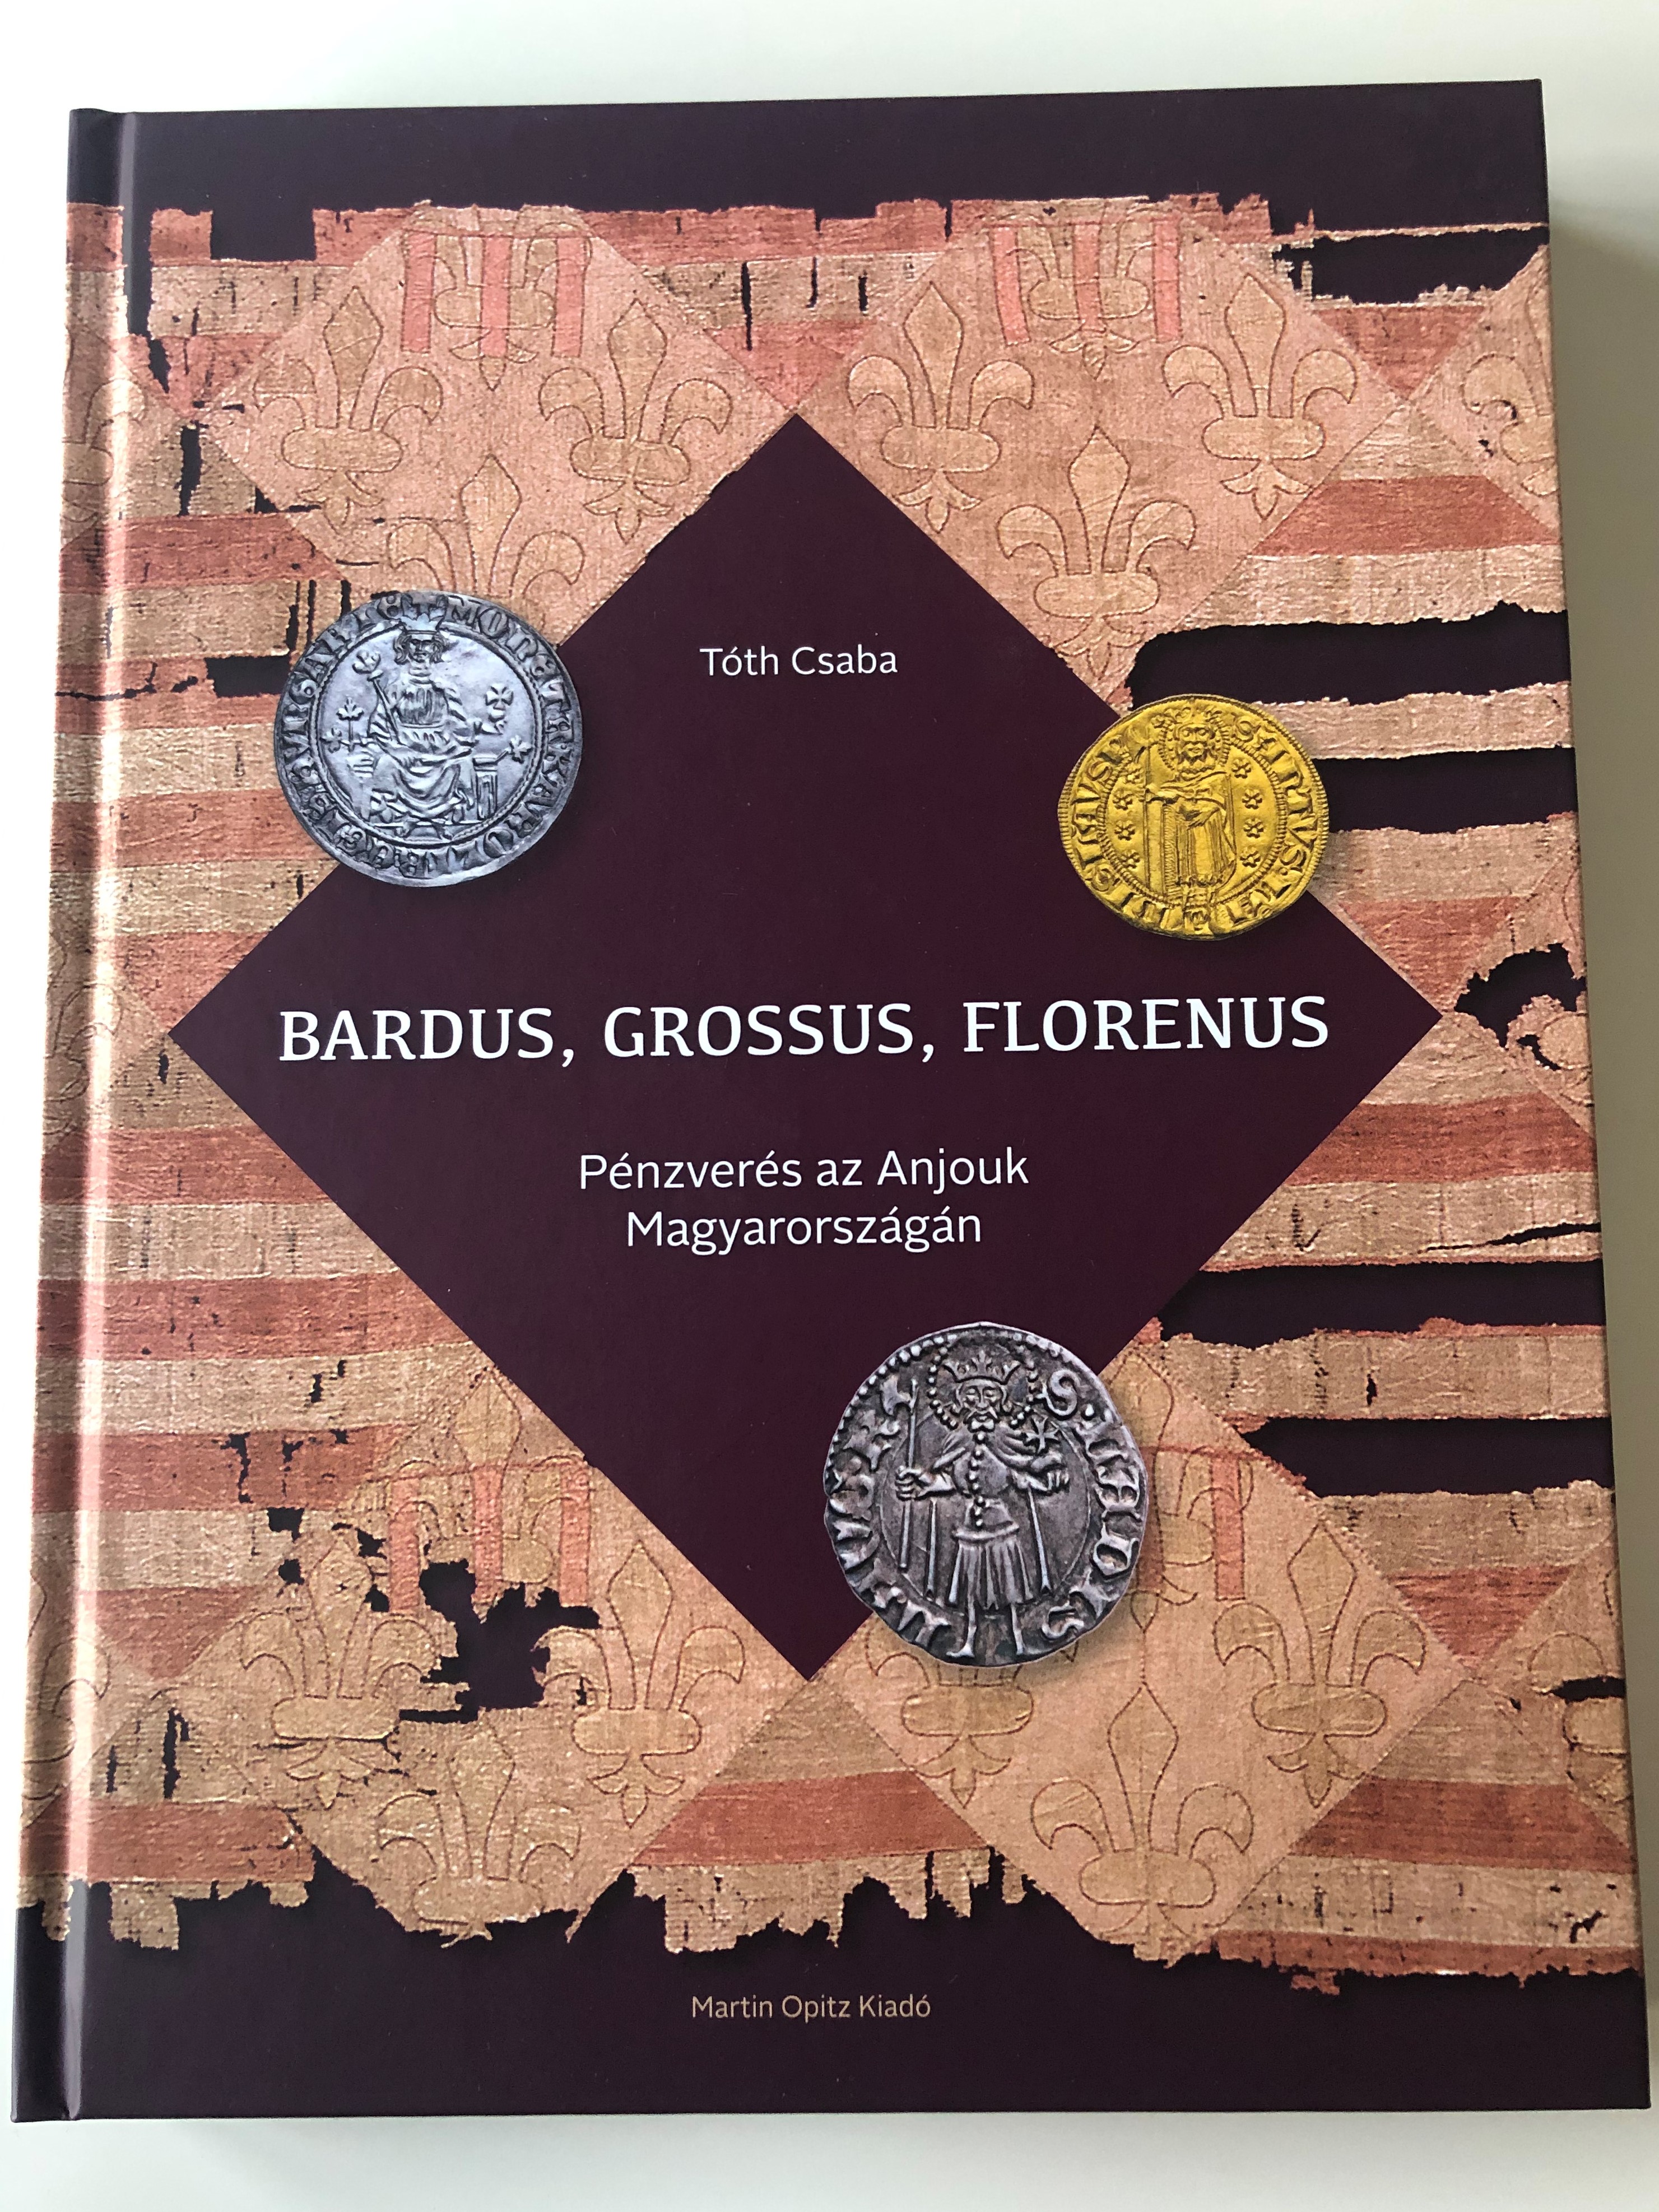 bardus-grossus-florenus-by-t-th-csaba-1.jpg